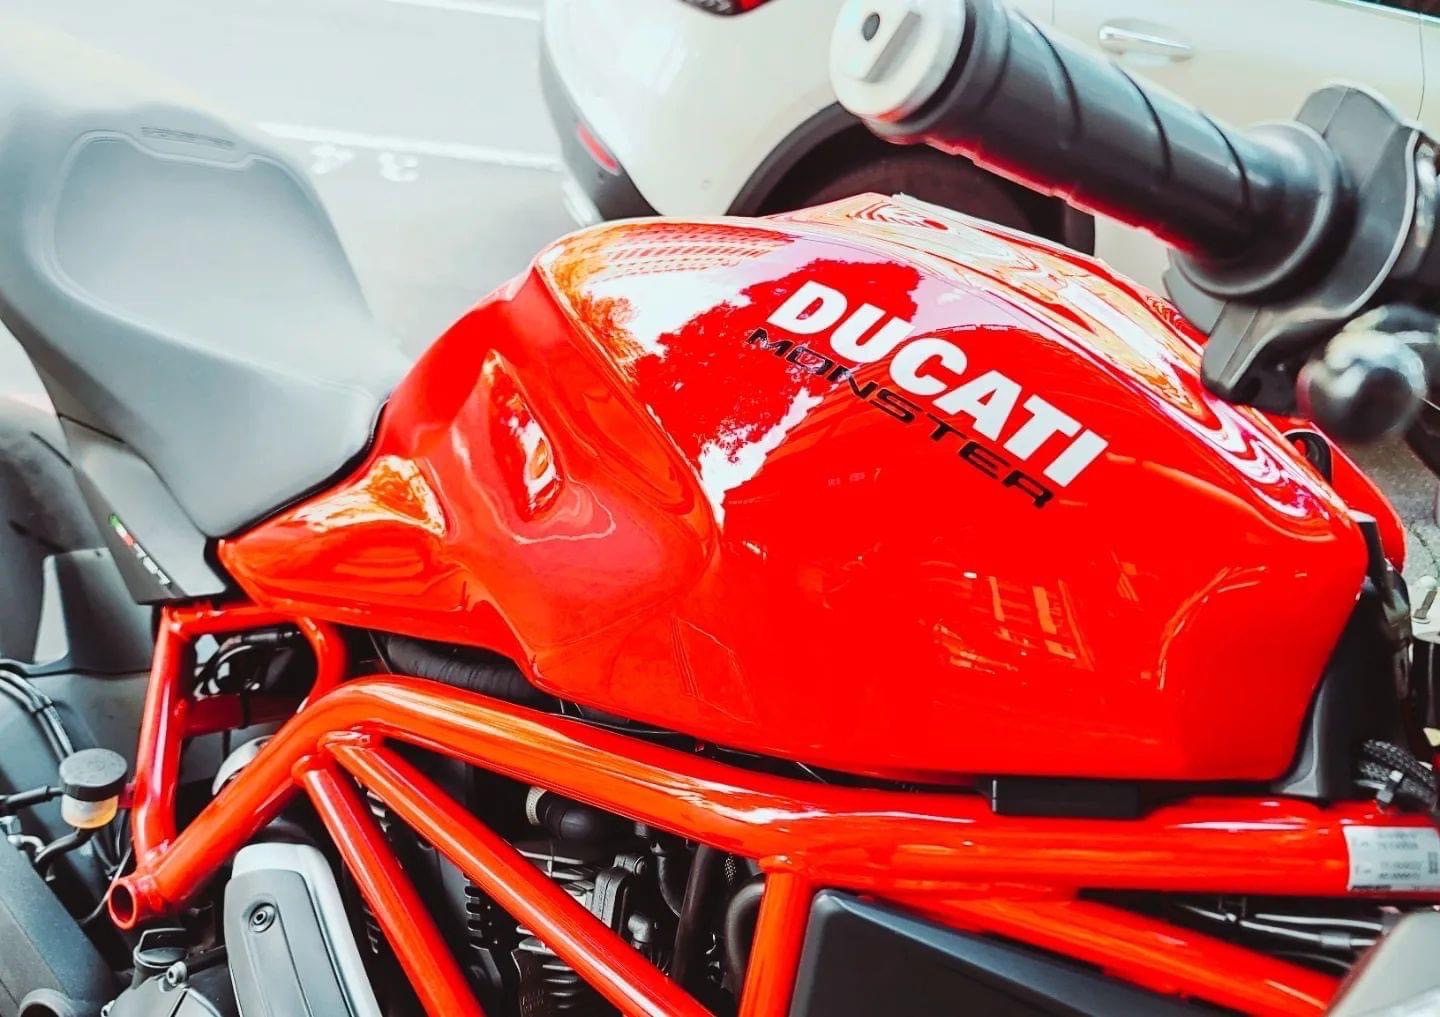 DUCATI MONSTER 797 - 中古/二手車出售中 2017/18 Ducati Monster797 | 小資族二手重機買賣